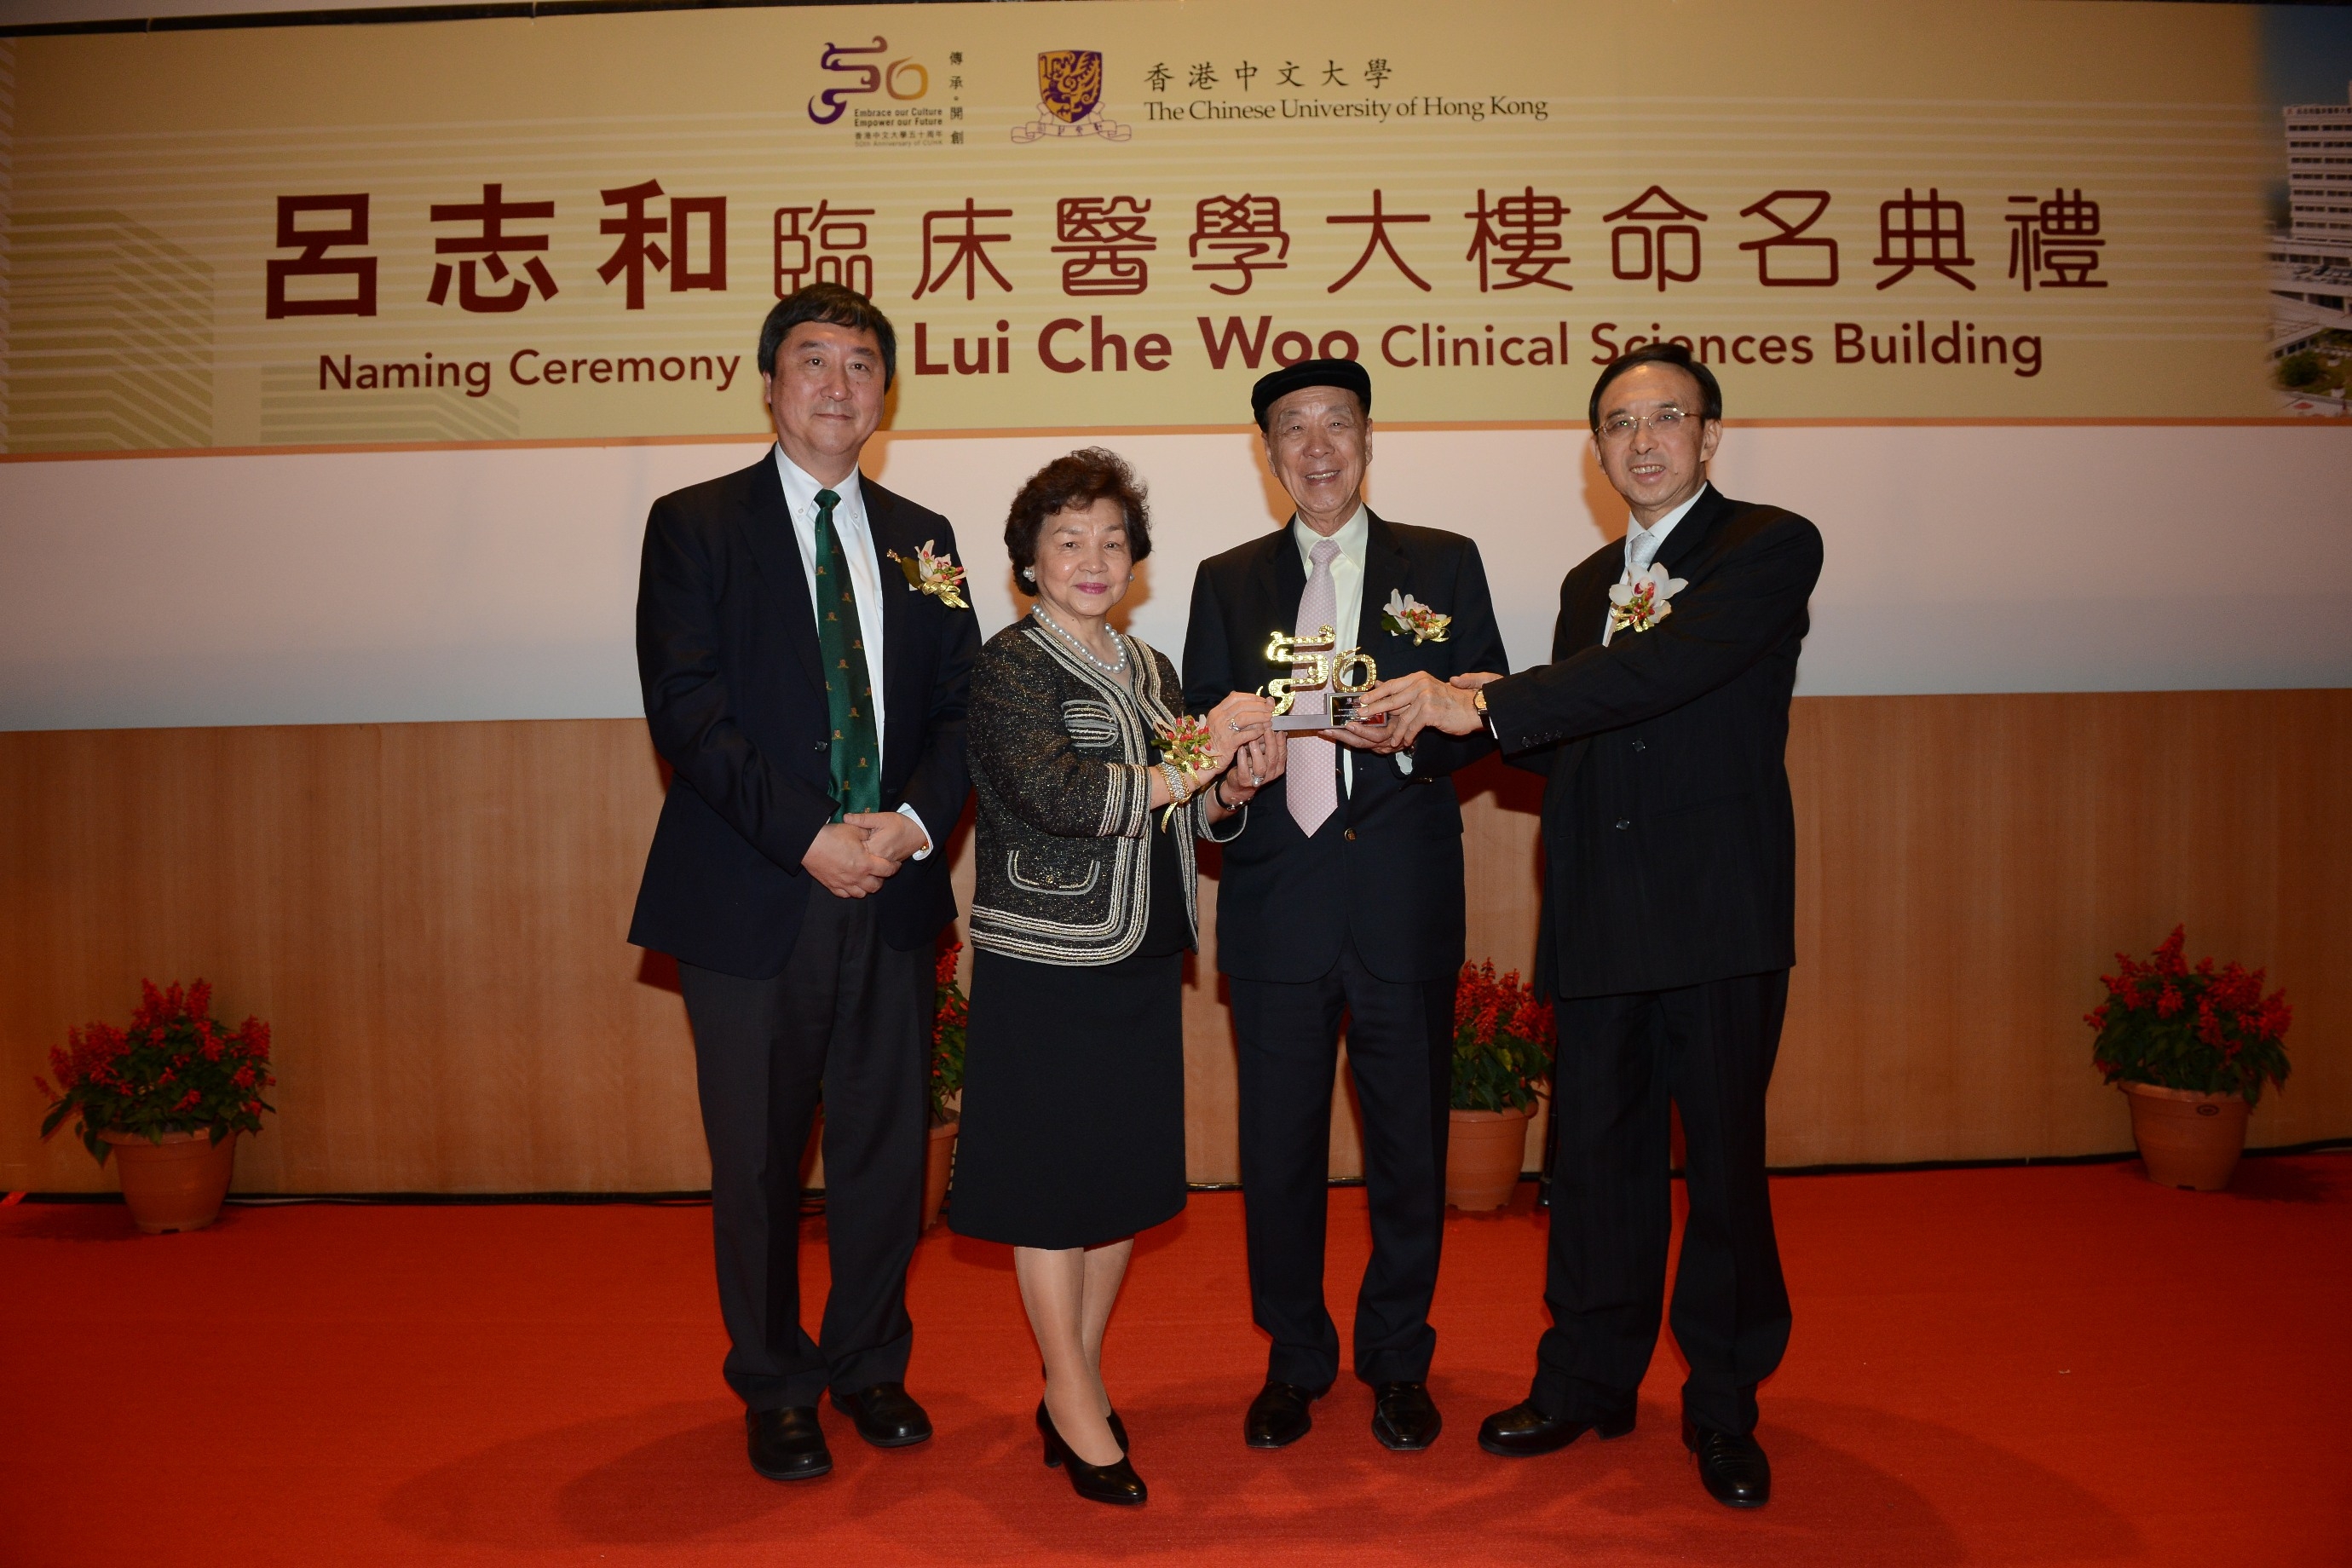 Dr. Vincent Cheng (right) presents a CUHK 50th anniversary souvenir to Dr. Lui Che Woo.